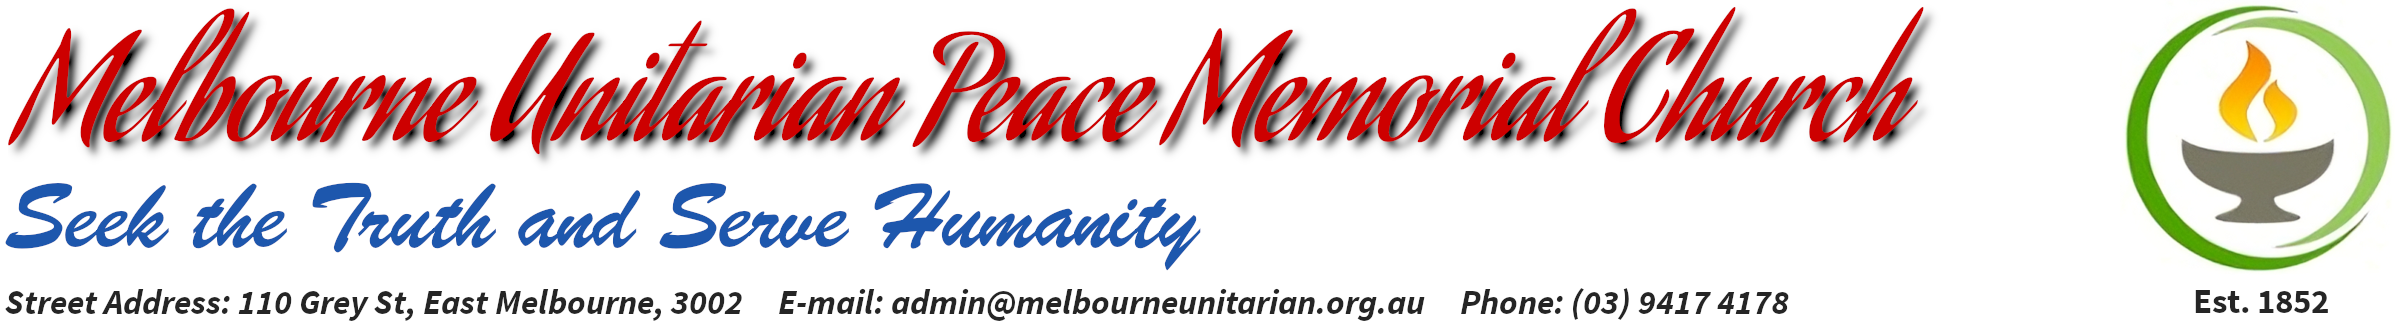 Melbourne Unitarian Peace Memorial Church